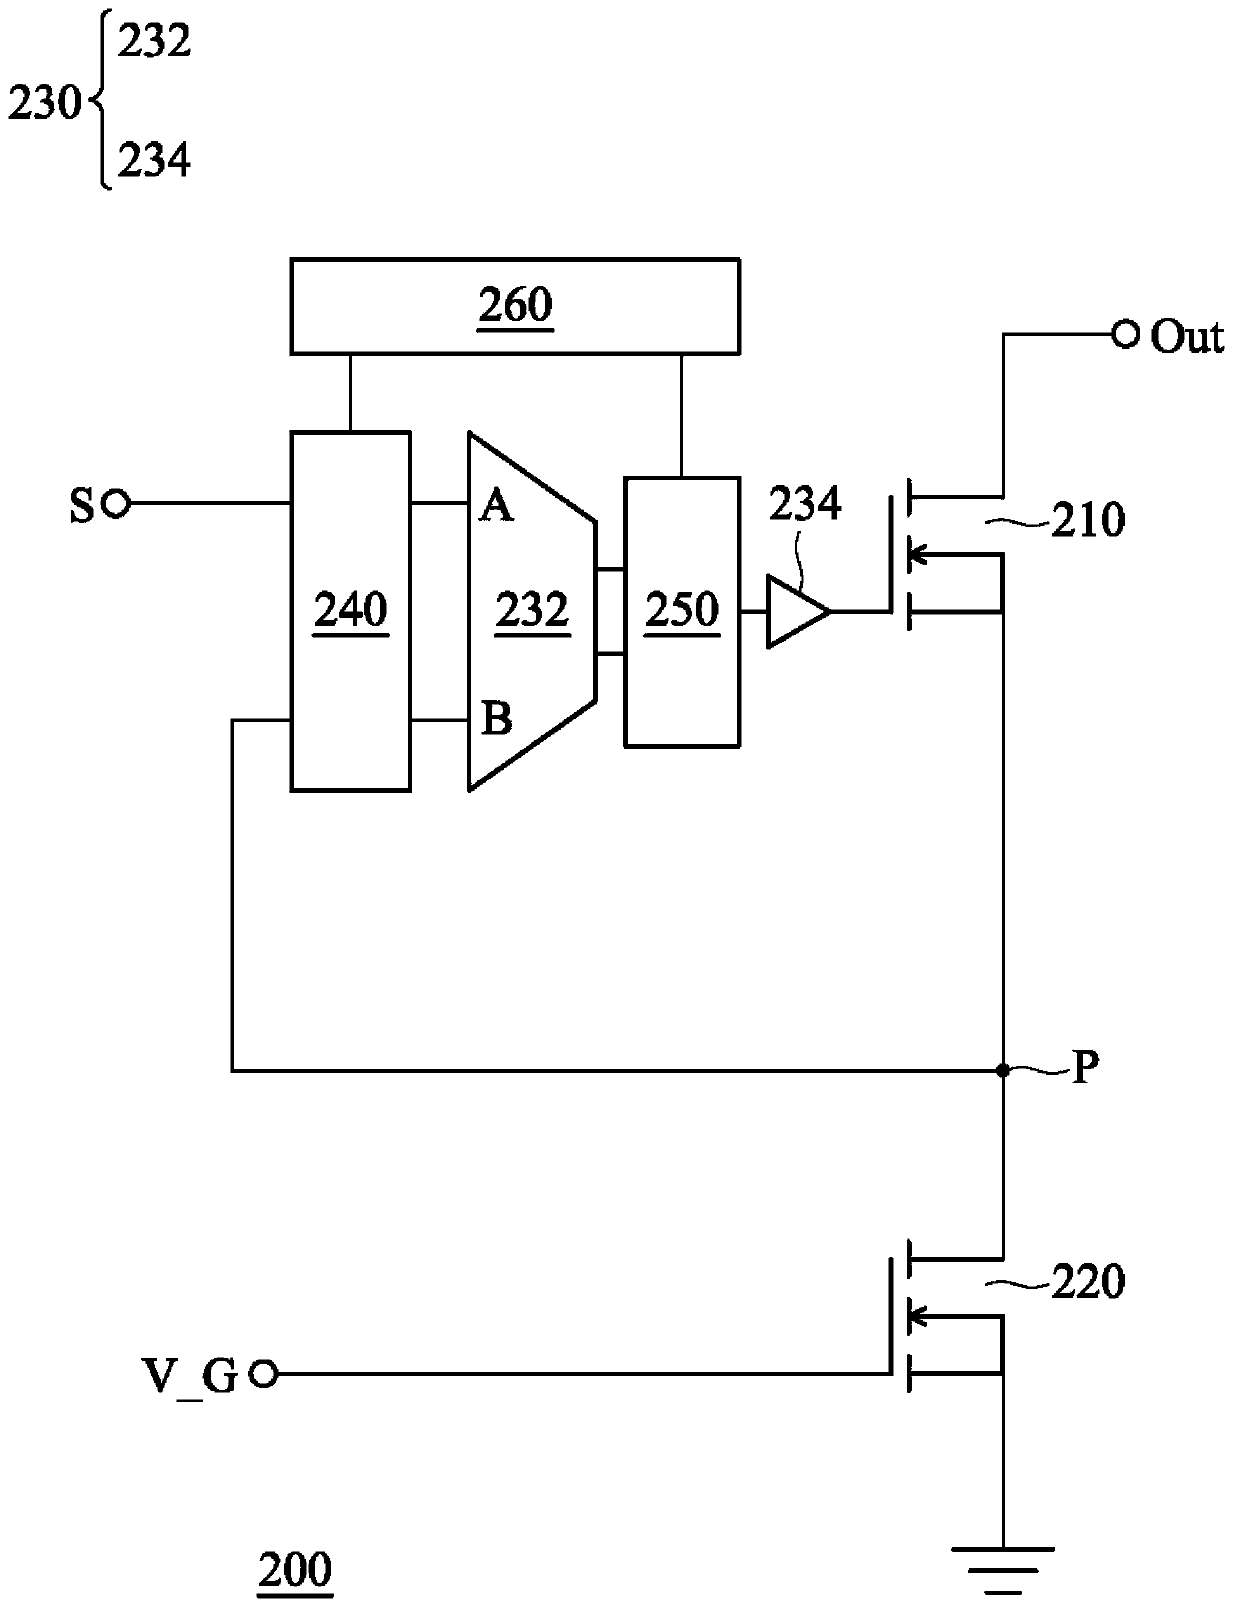 Light-emitting diode drive circuit